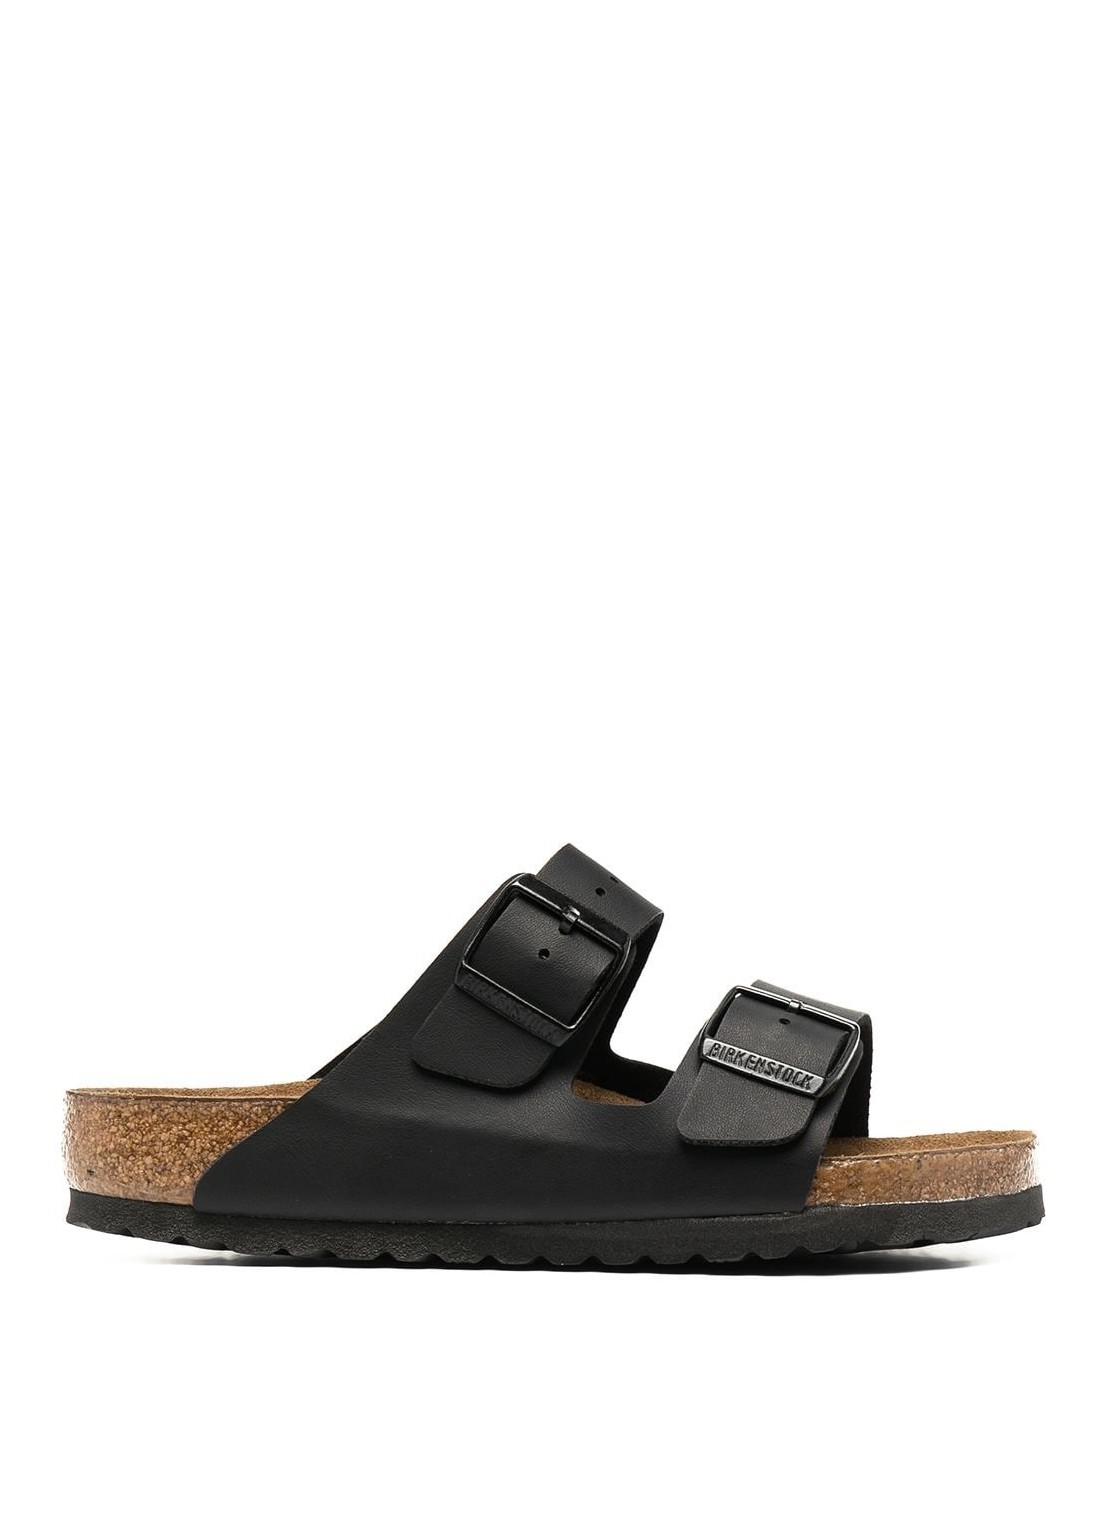 Sandalia birkenstock sandal man arizona sfb bf 551251 black talla 42
 